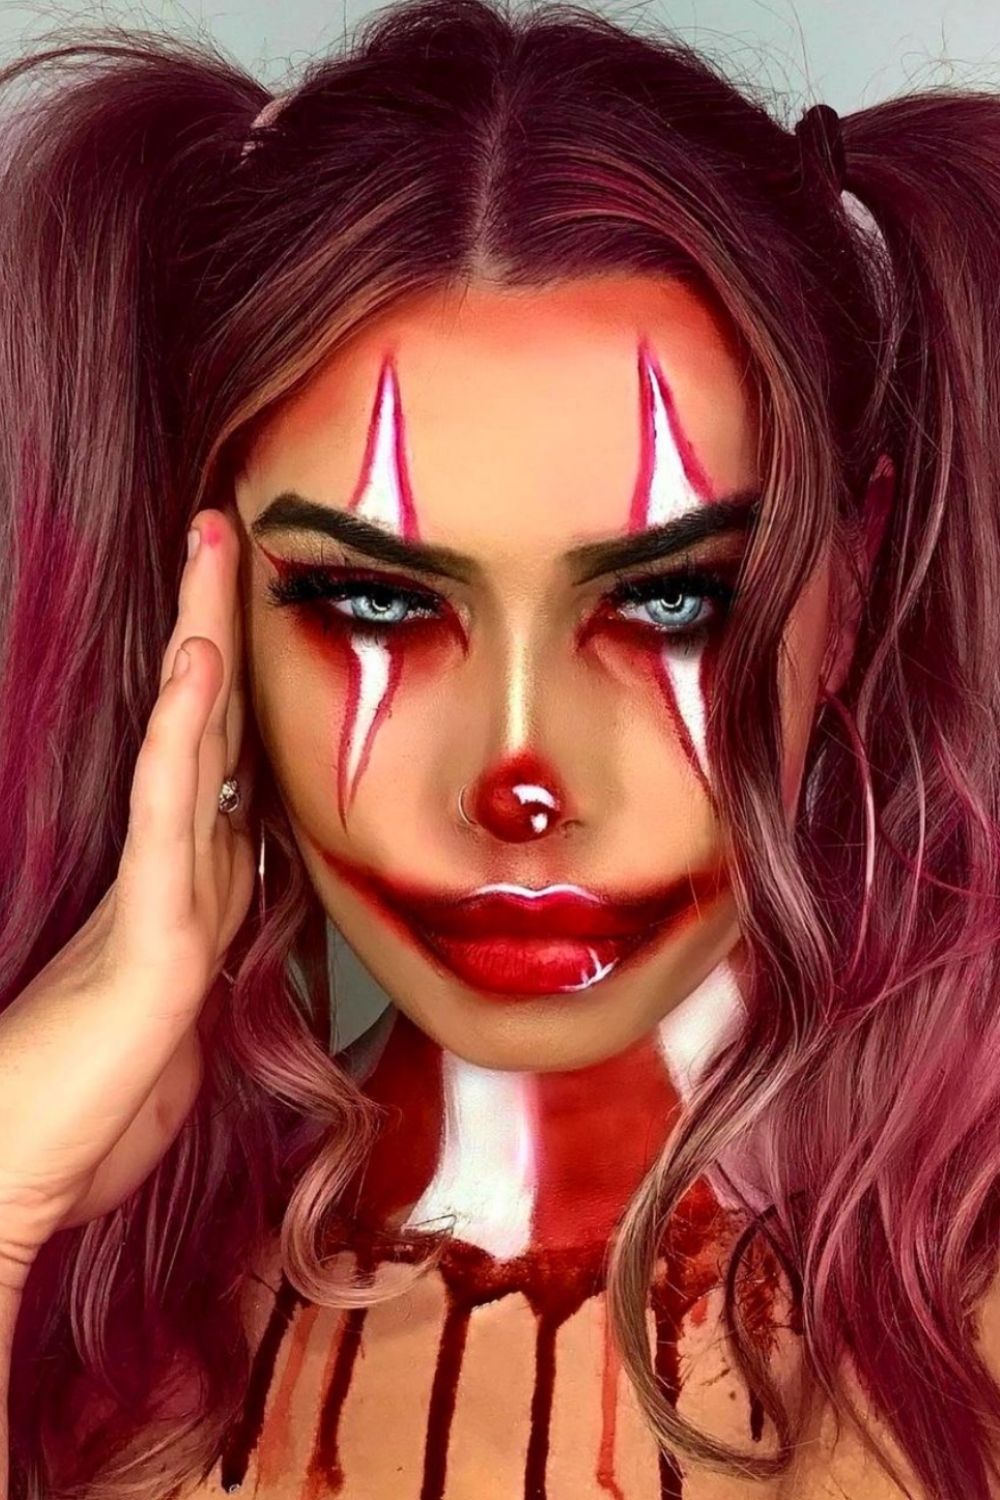 40 Creative Bloody Halloween makeup looks For Halloween party